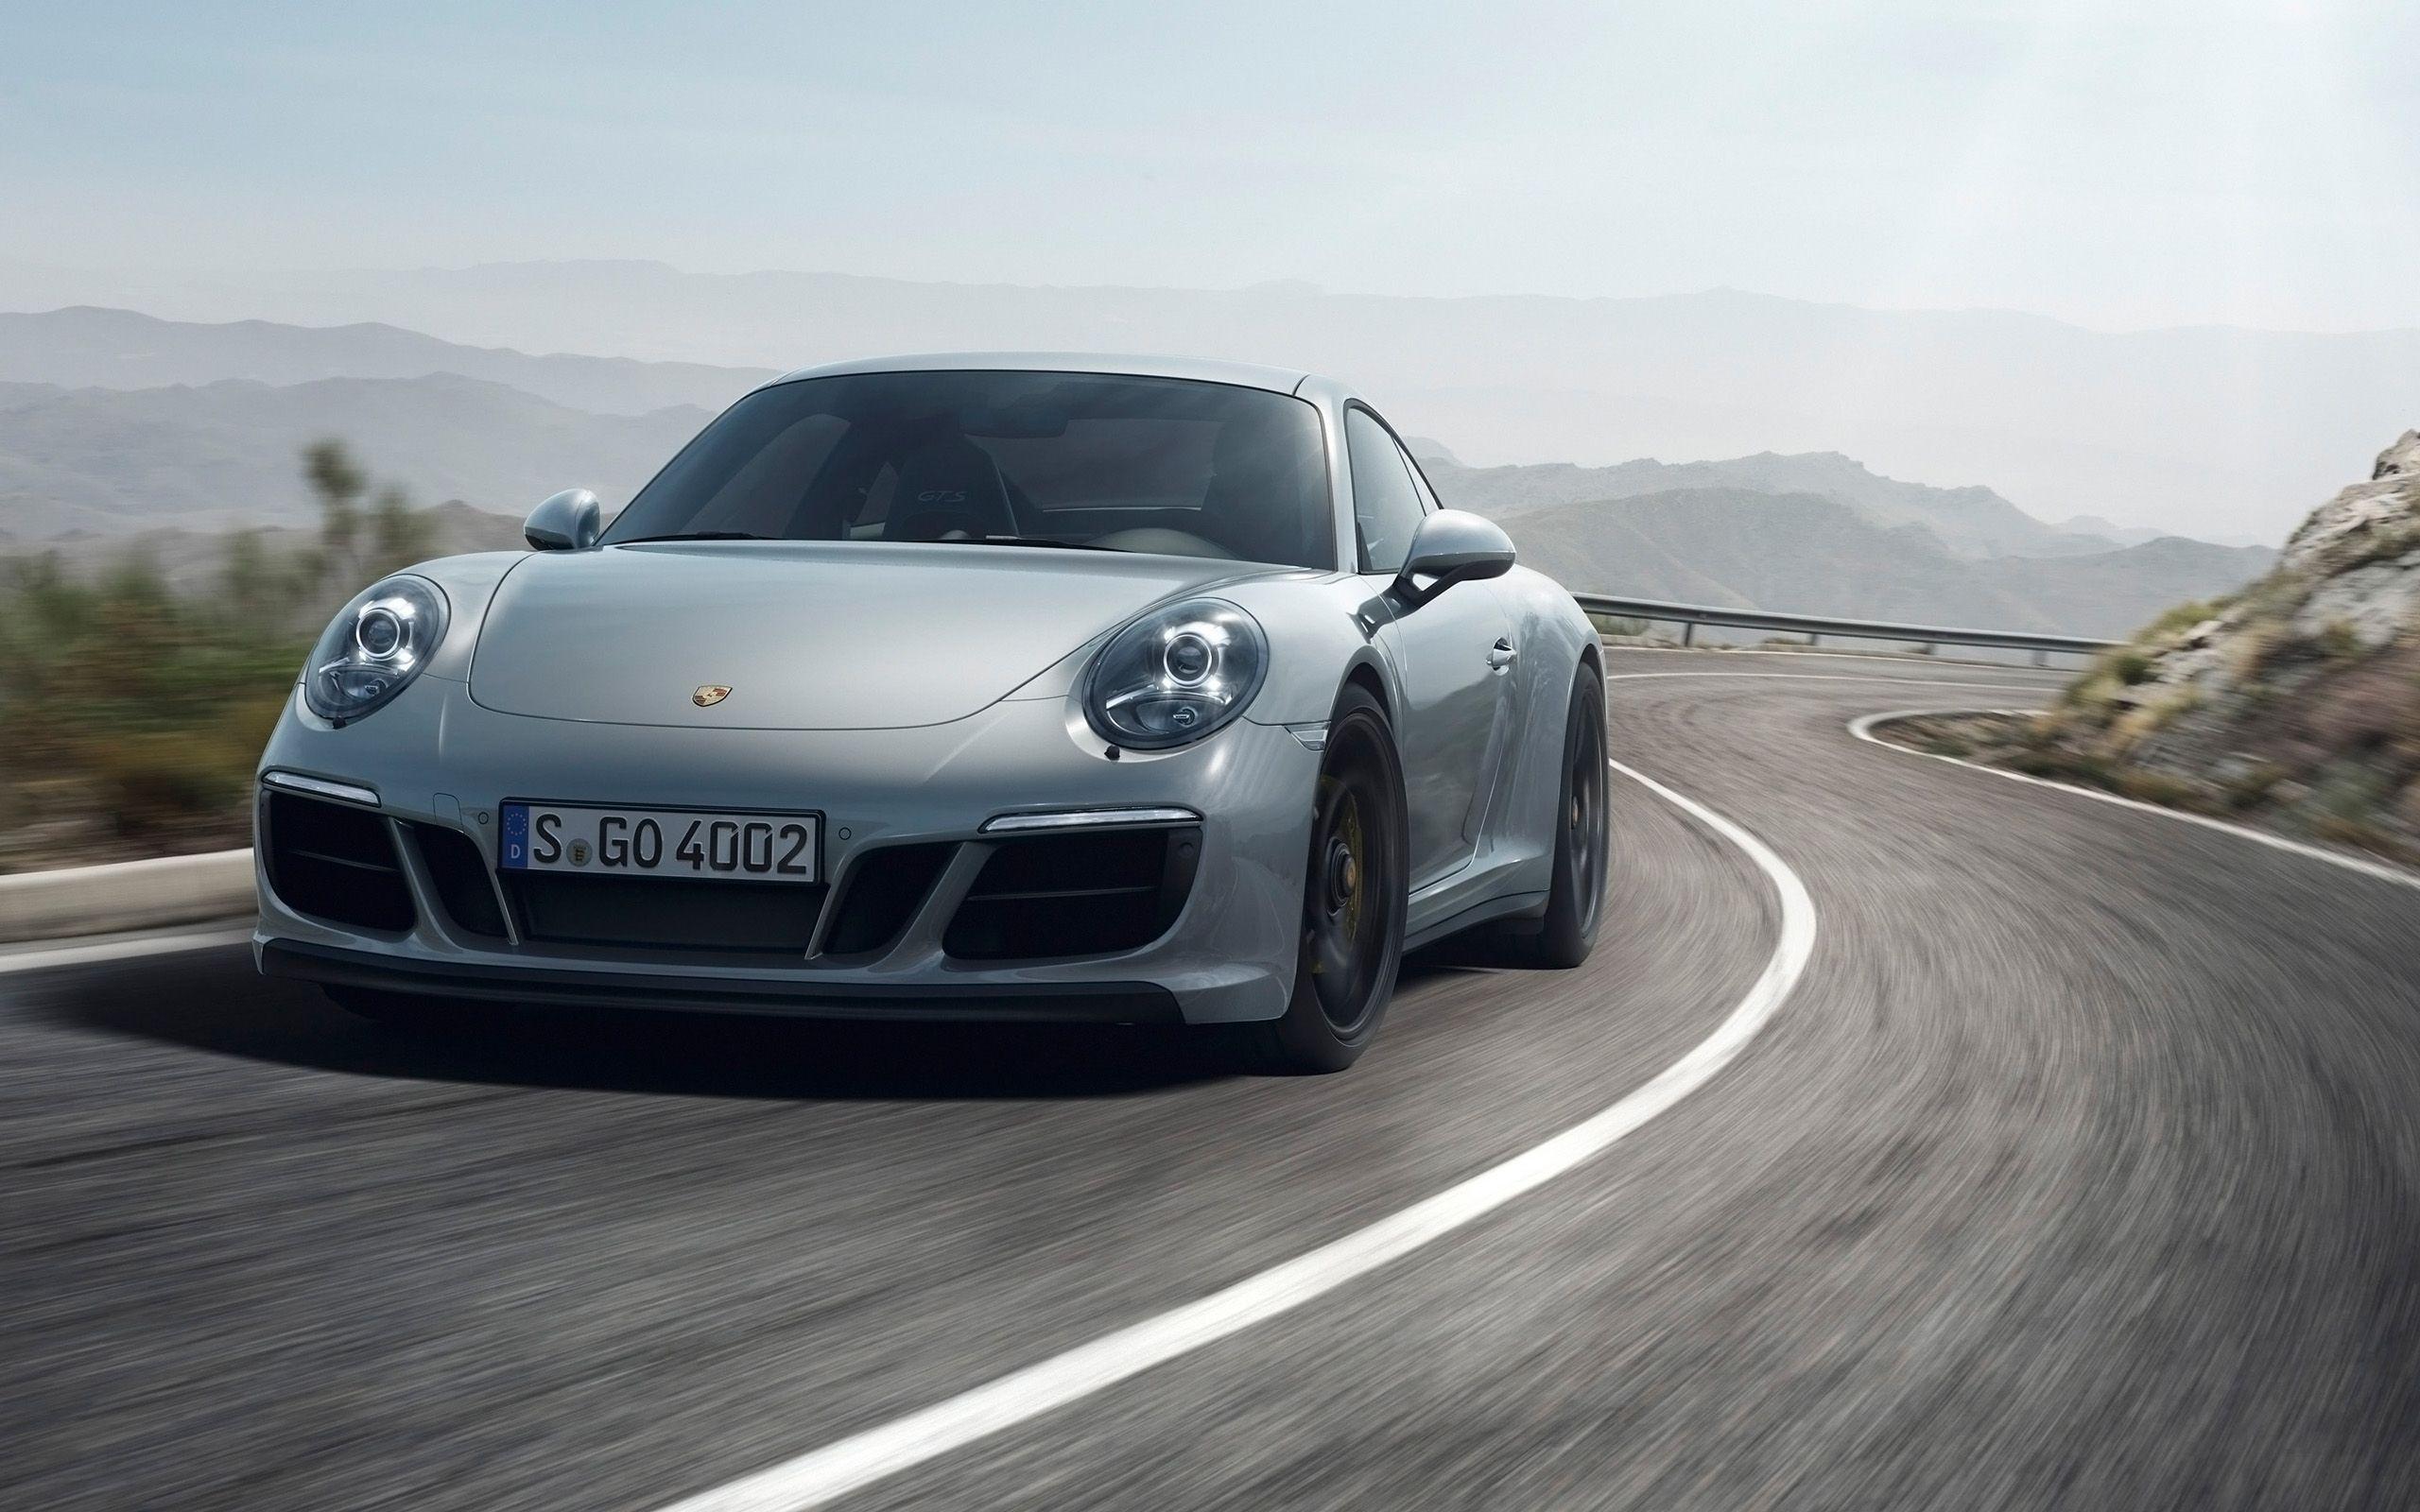 Porsche 911 Gts Image For iPhone Wallpaper HD